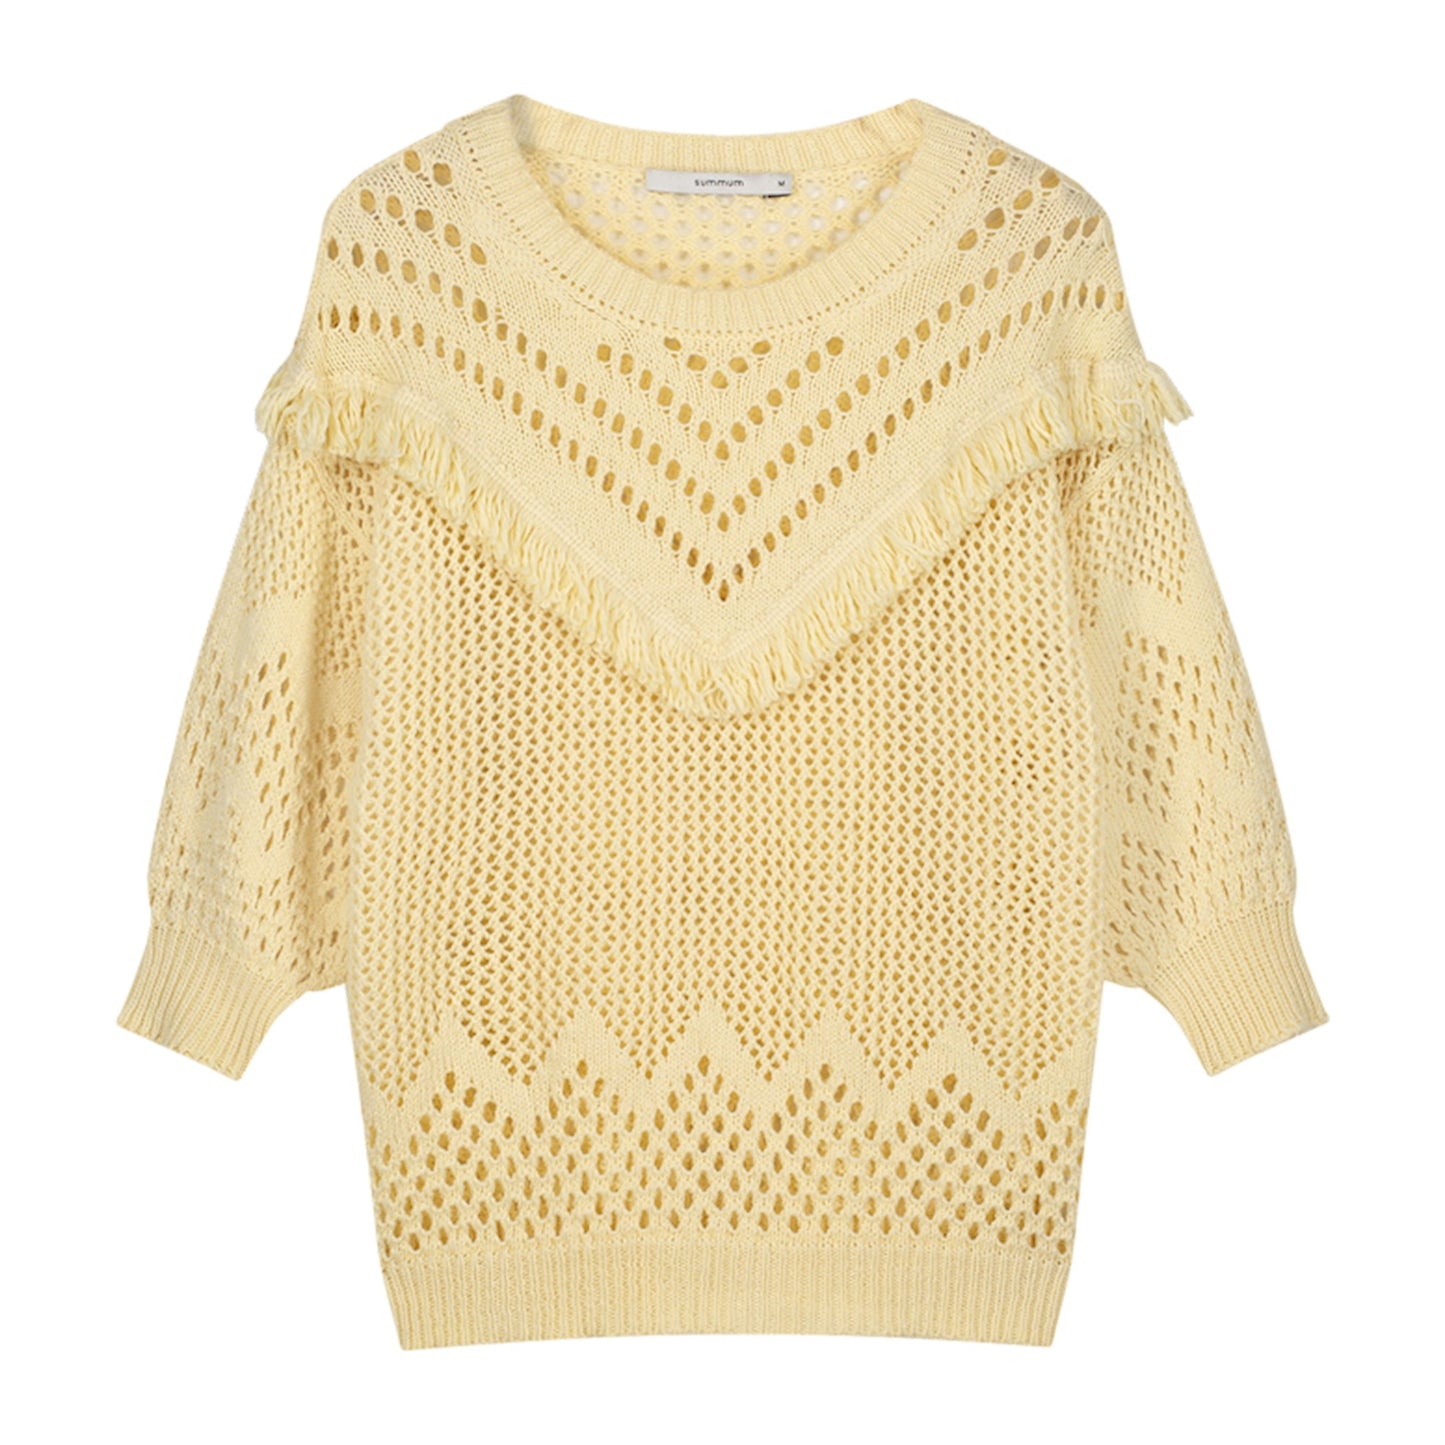 Summum Woman | Fringe sweater cotton acrylic knit